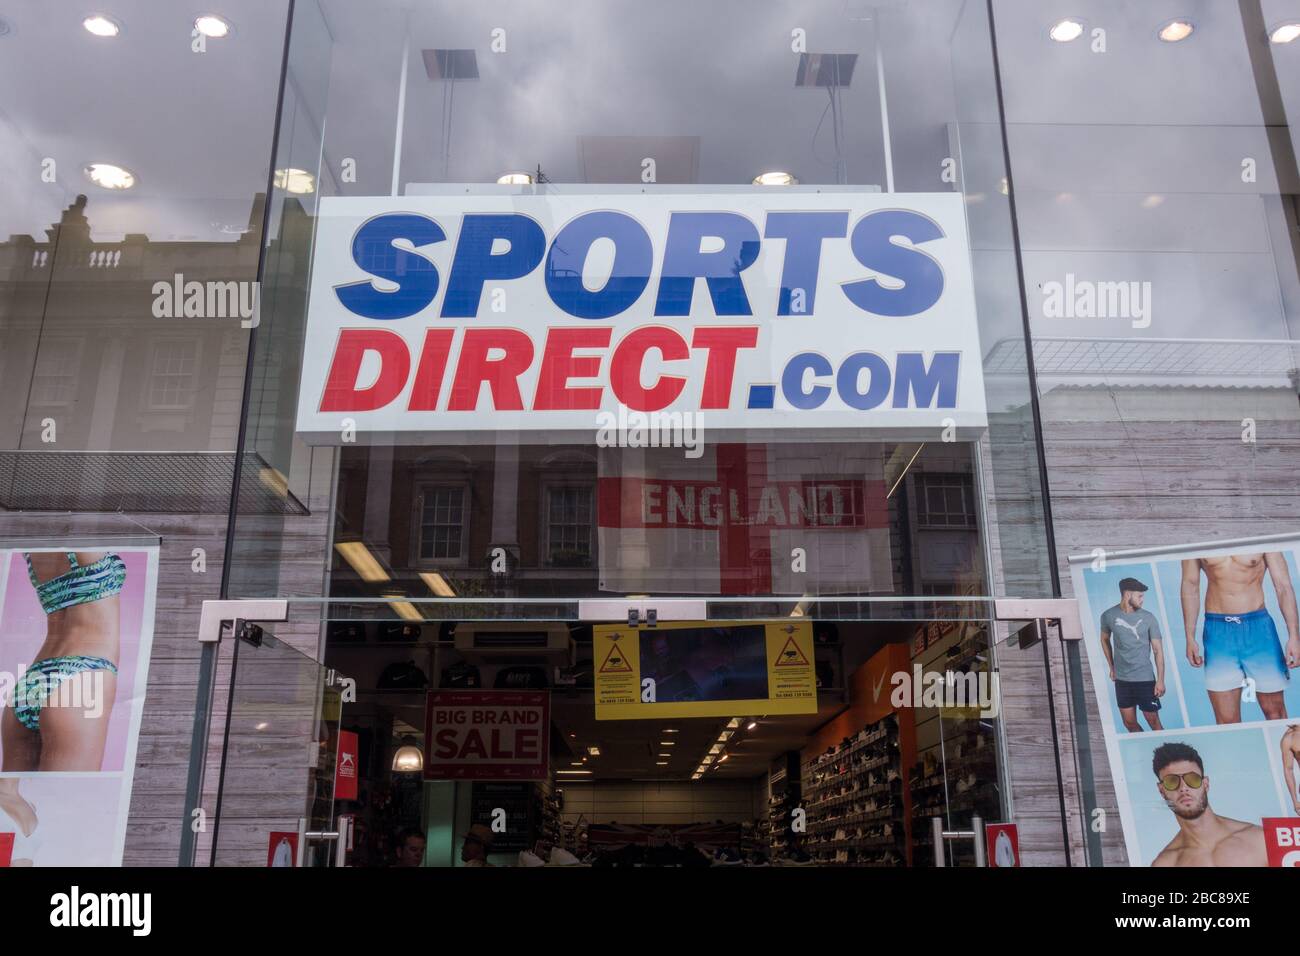 Sports Direct, British high street sporting goods retailer- exterior logo / signage- London Stock Photo